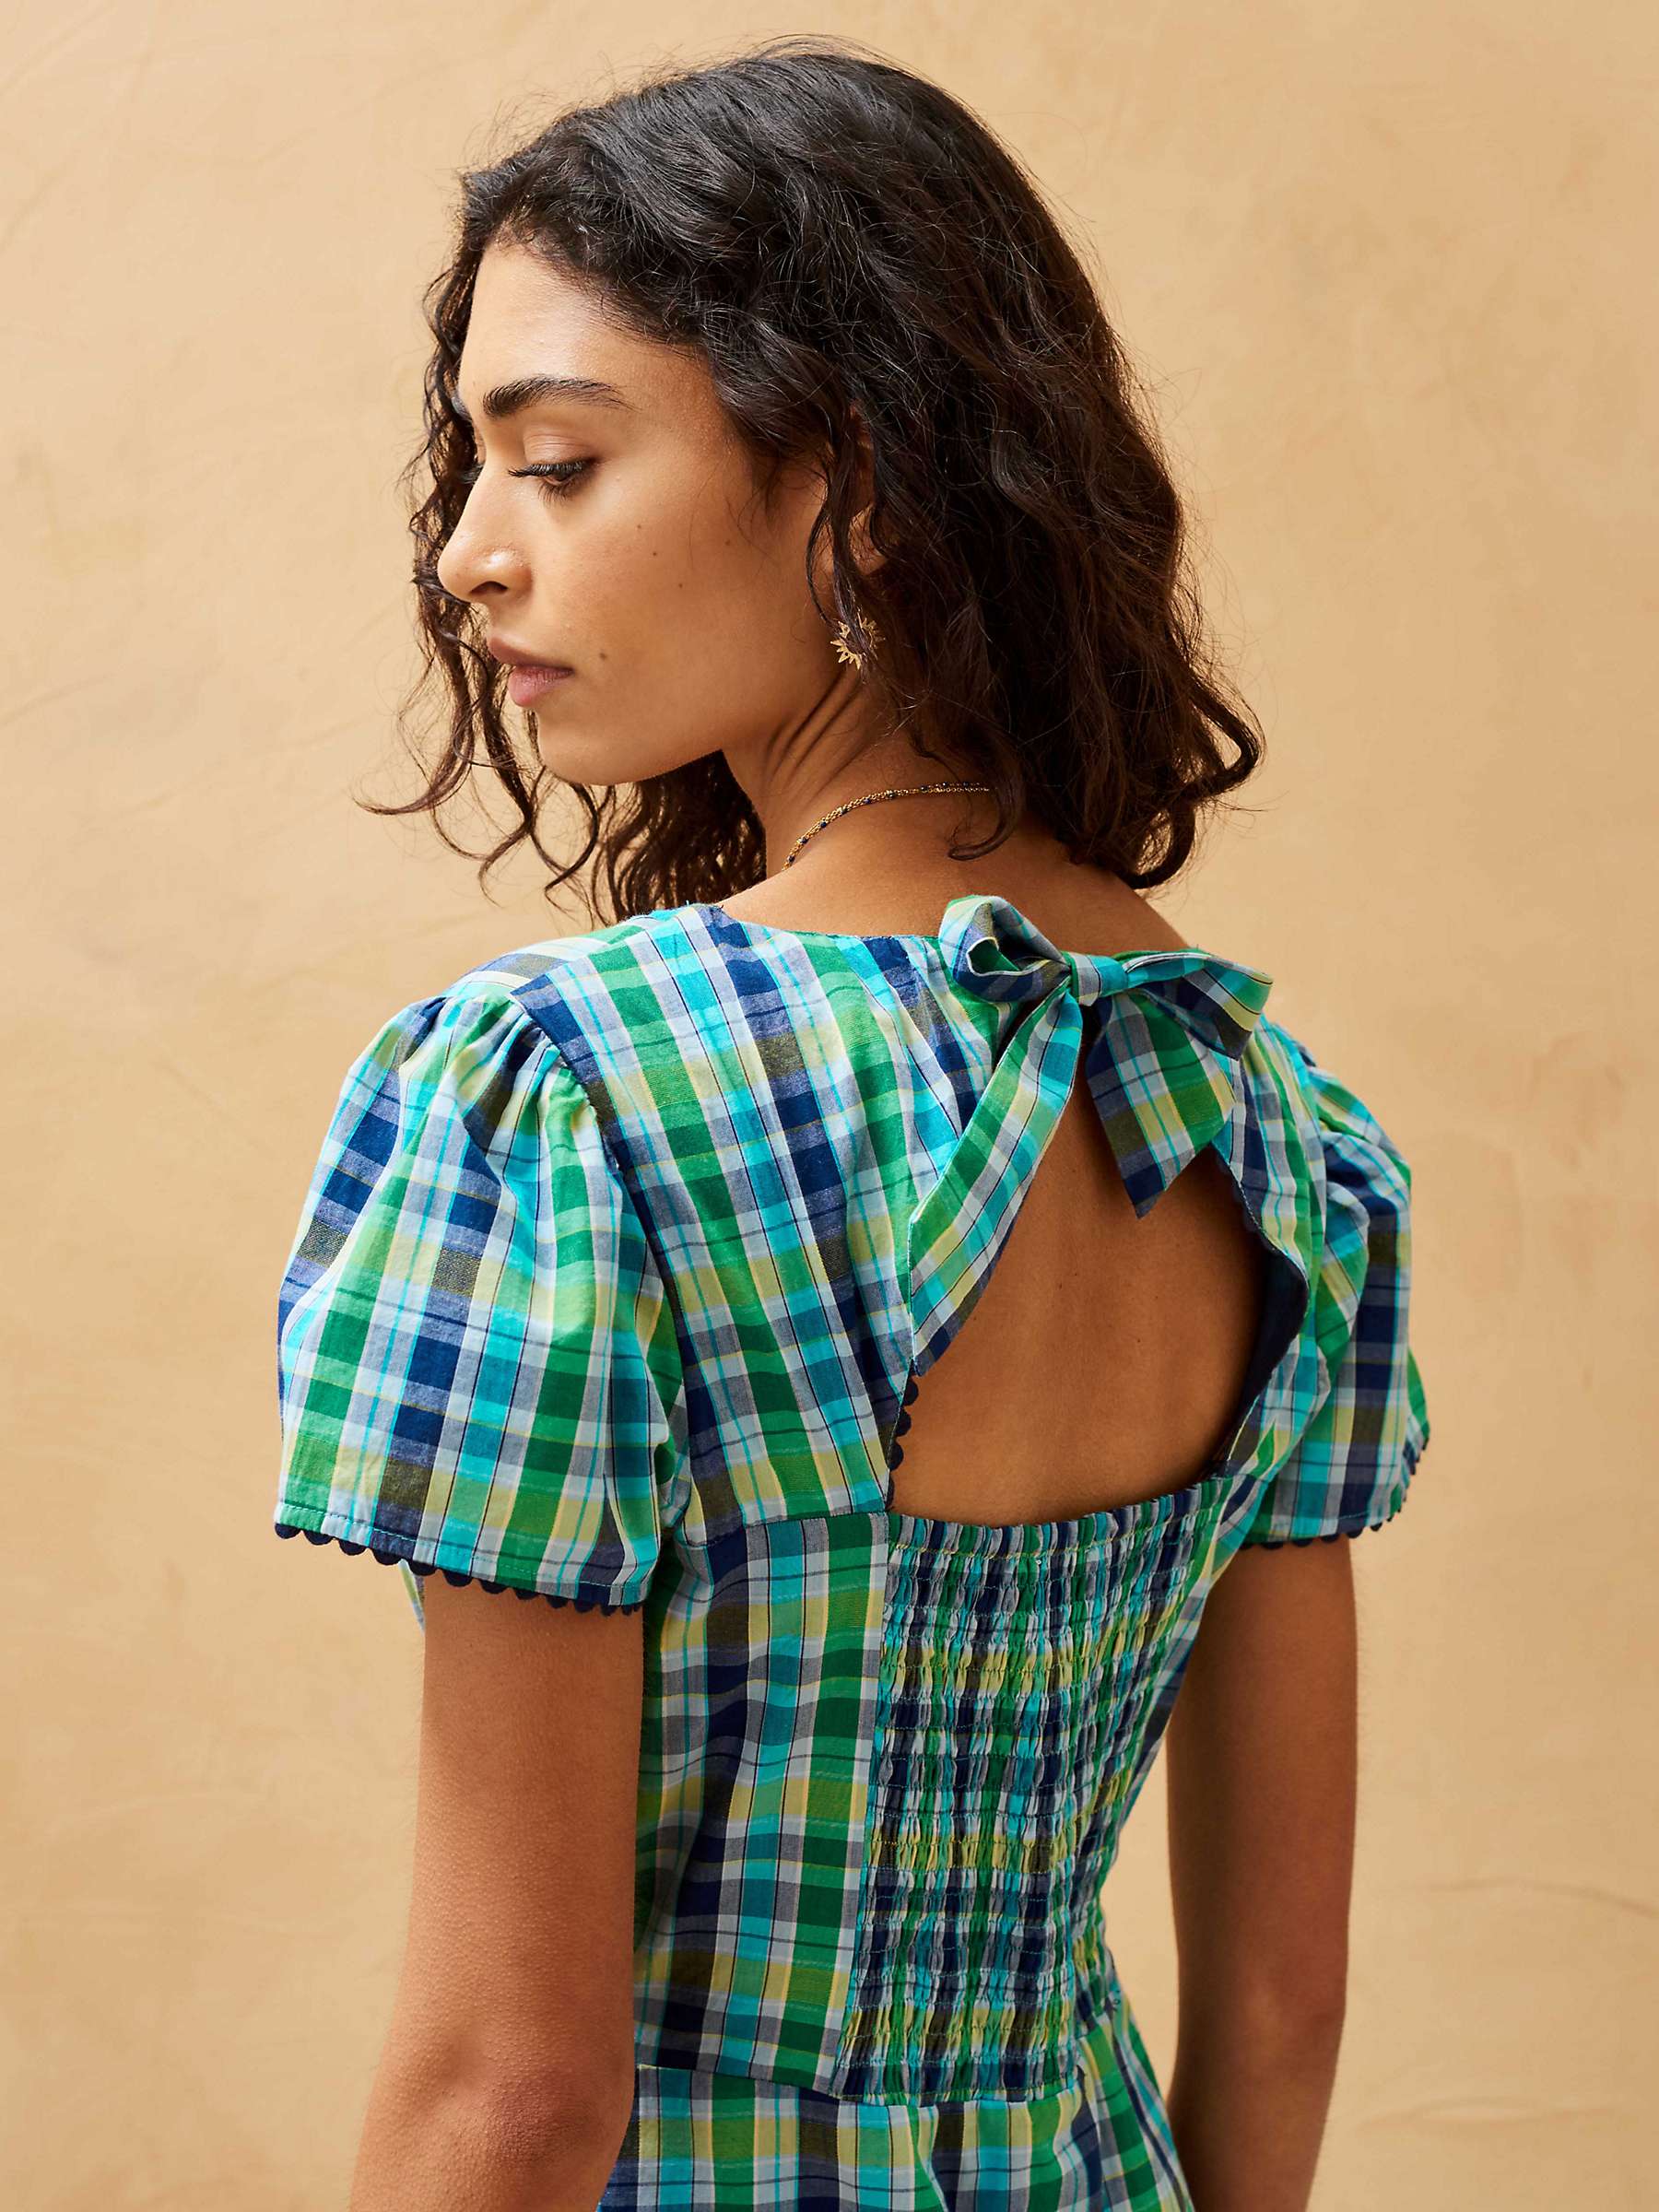 Buy Brora Cotton Check Tiered Midi Dress, Emerald/Multi Online at johnlewis.com